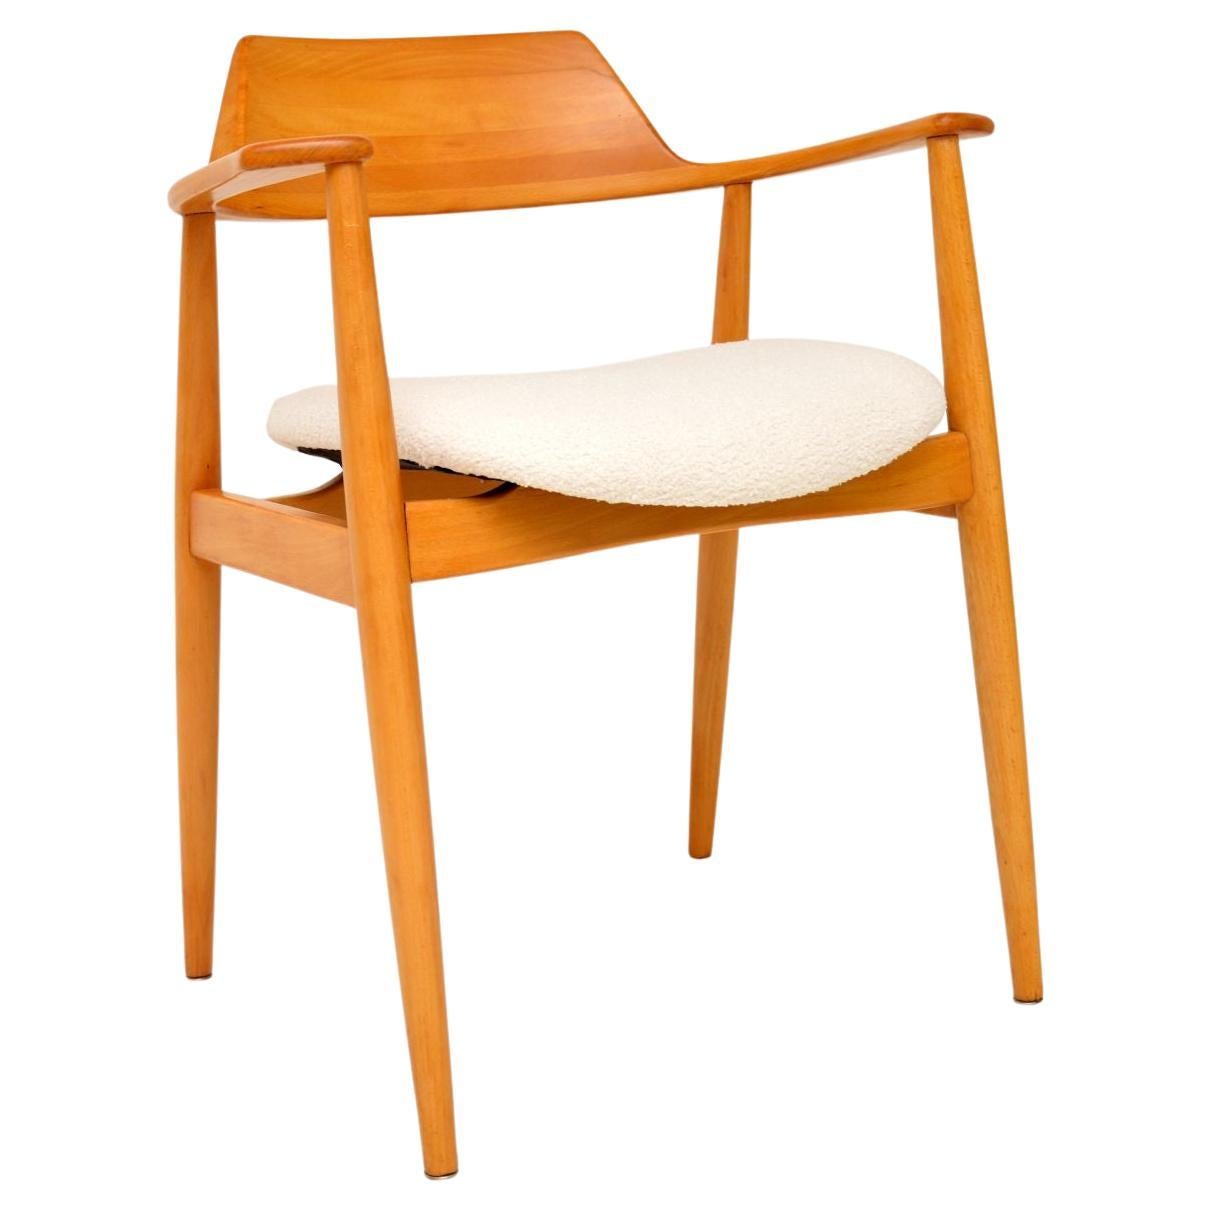 1960's Danish Vintage Cherry Wood Armchair / Desk Chair For Sale